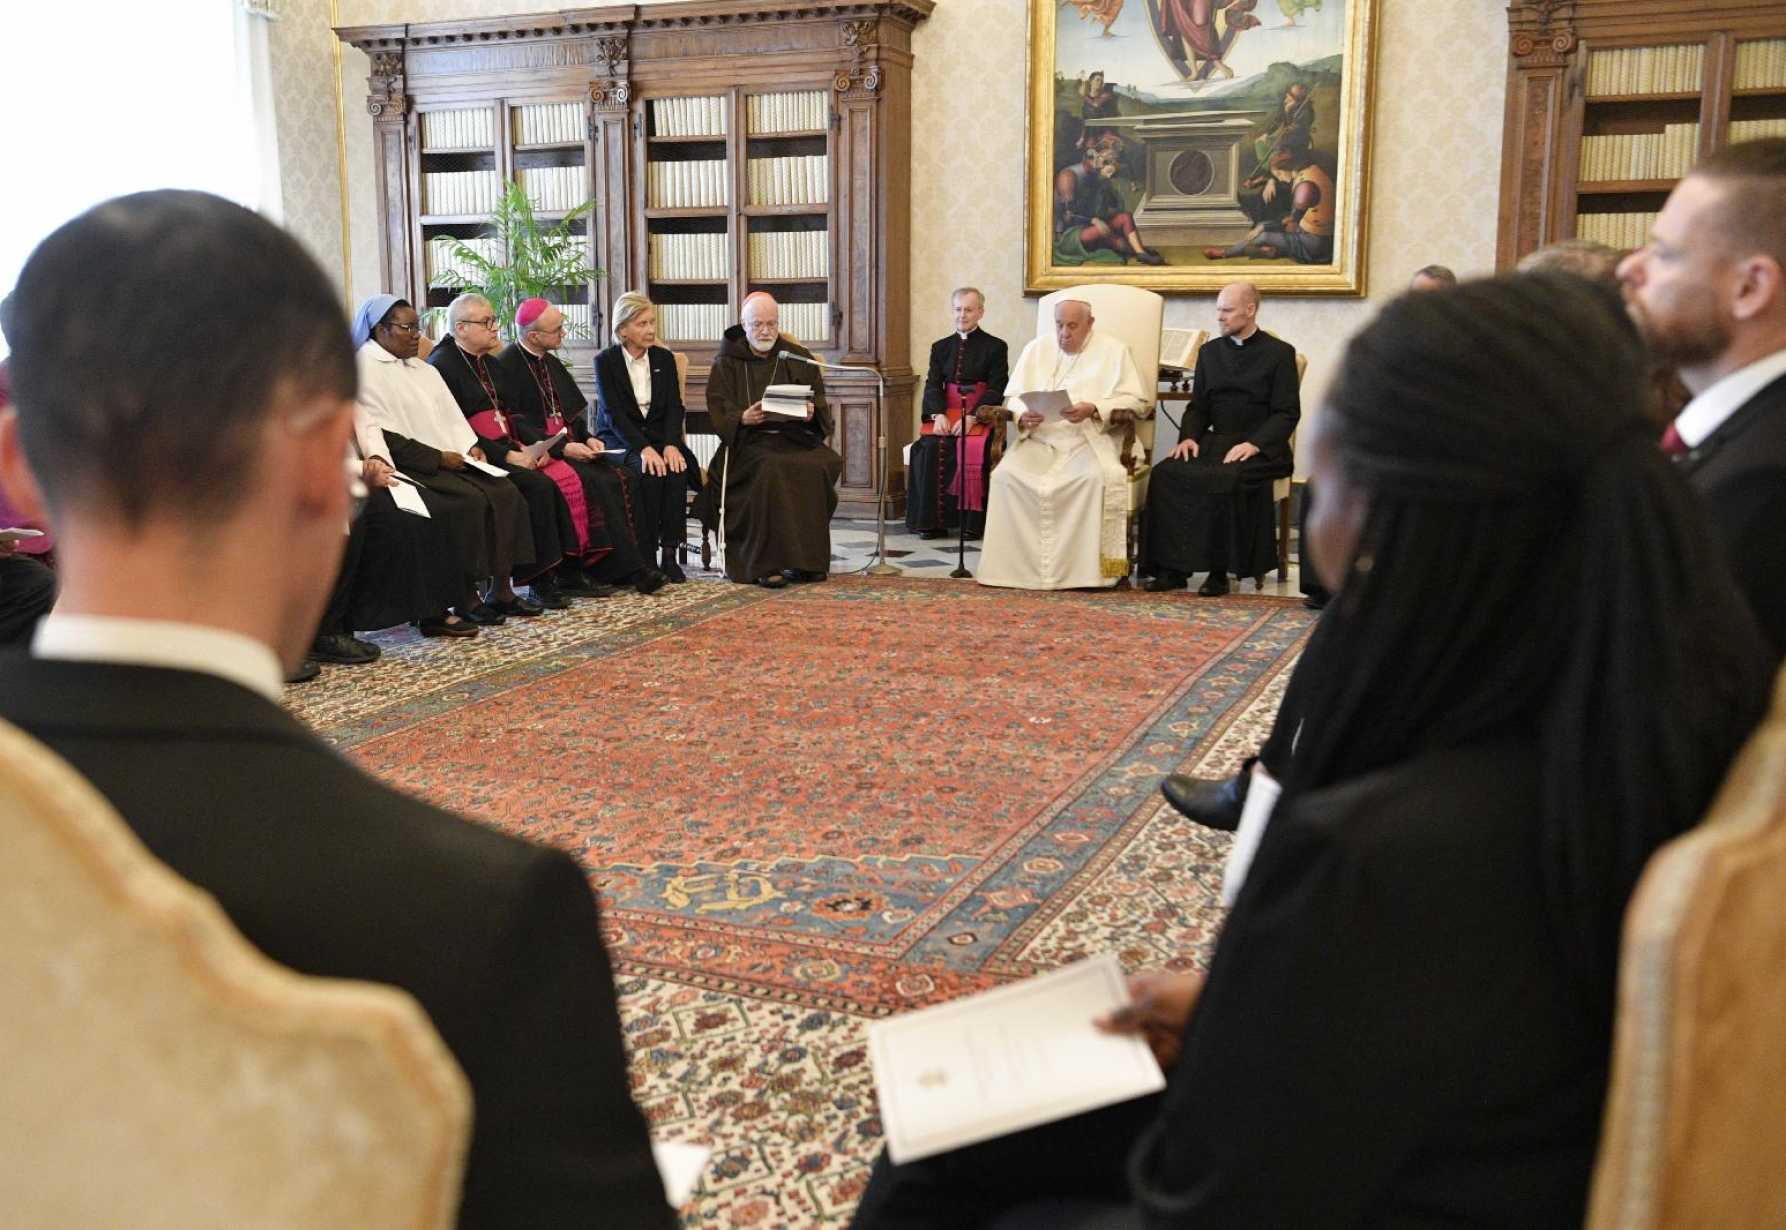 Pope to safeguarding commission: Be kind, bring hope, heal broken lives